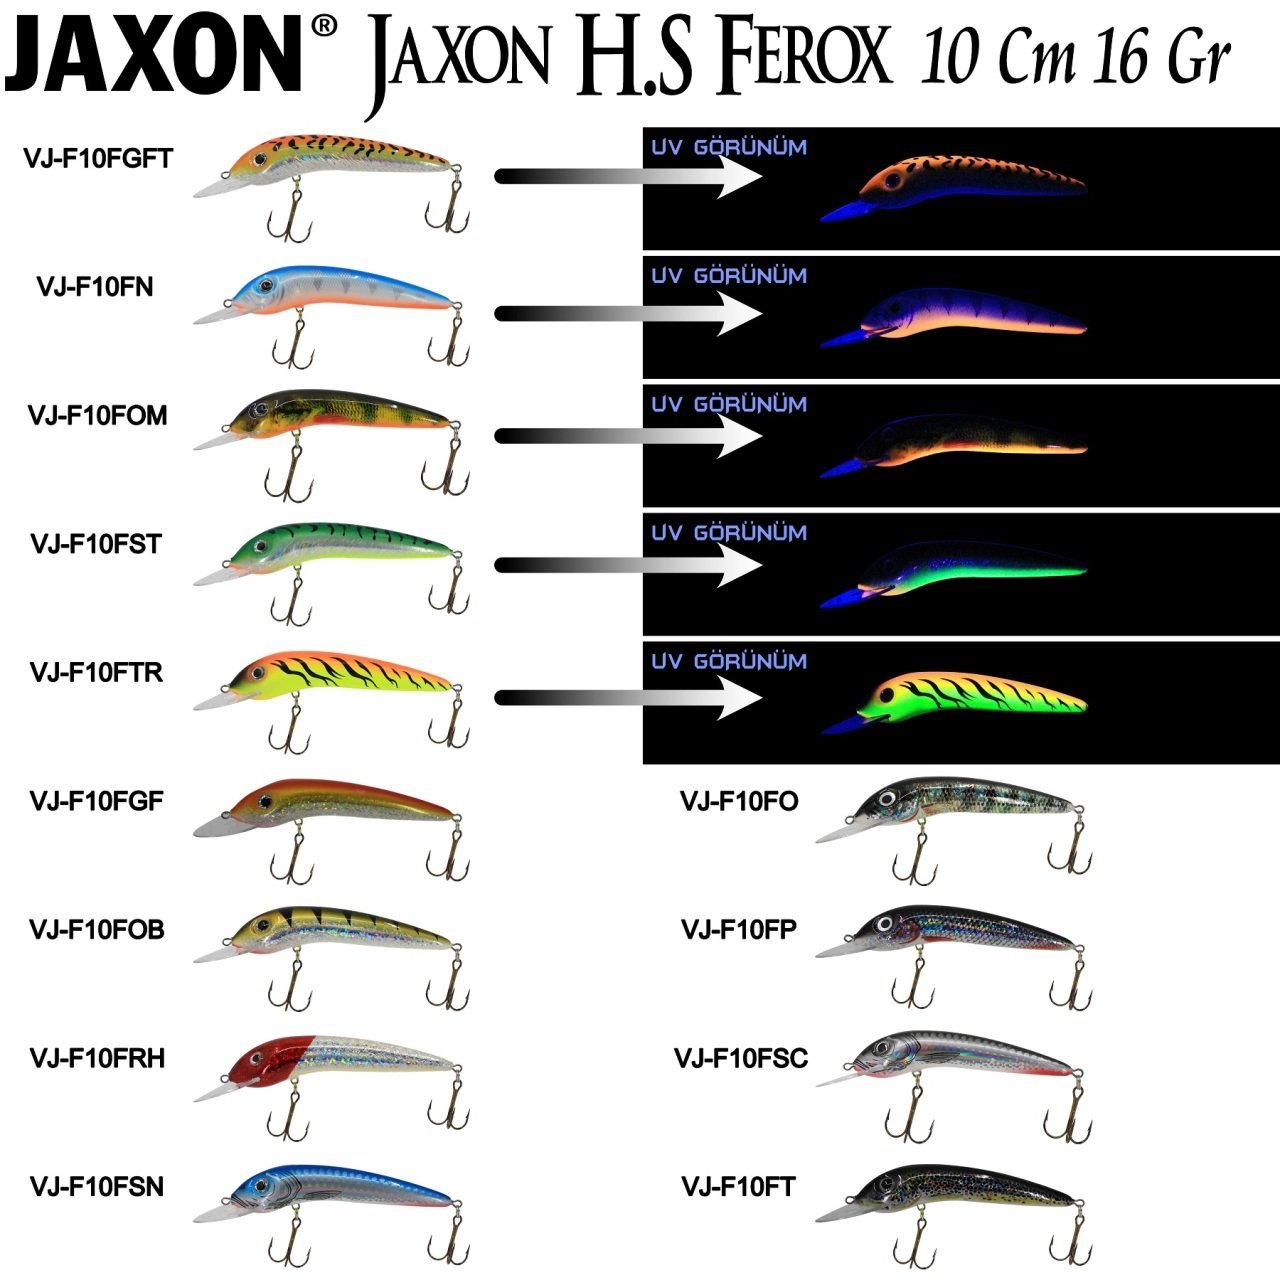 Jaxon H.S Ferox 10 Cm Fn